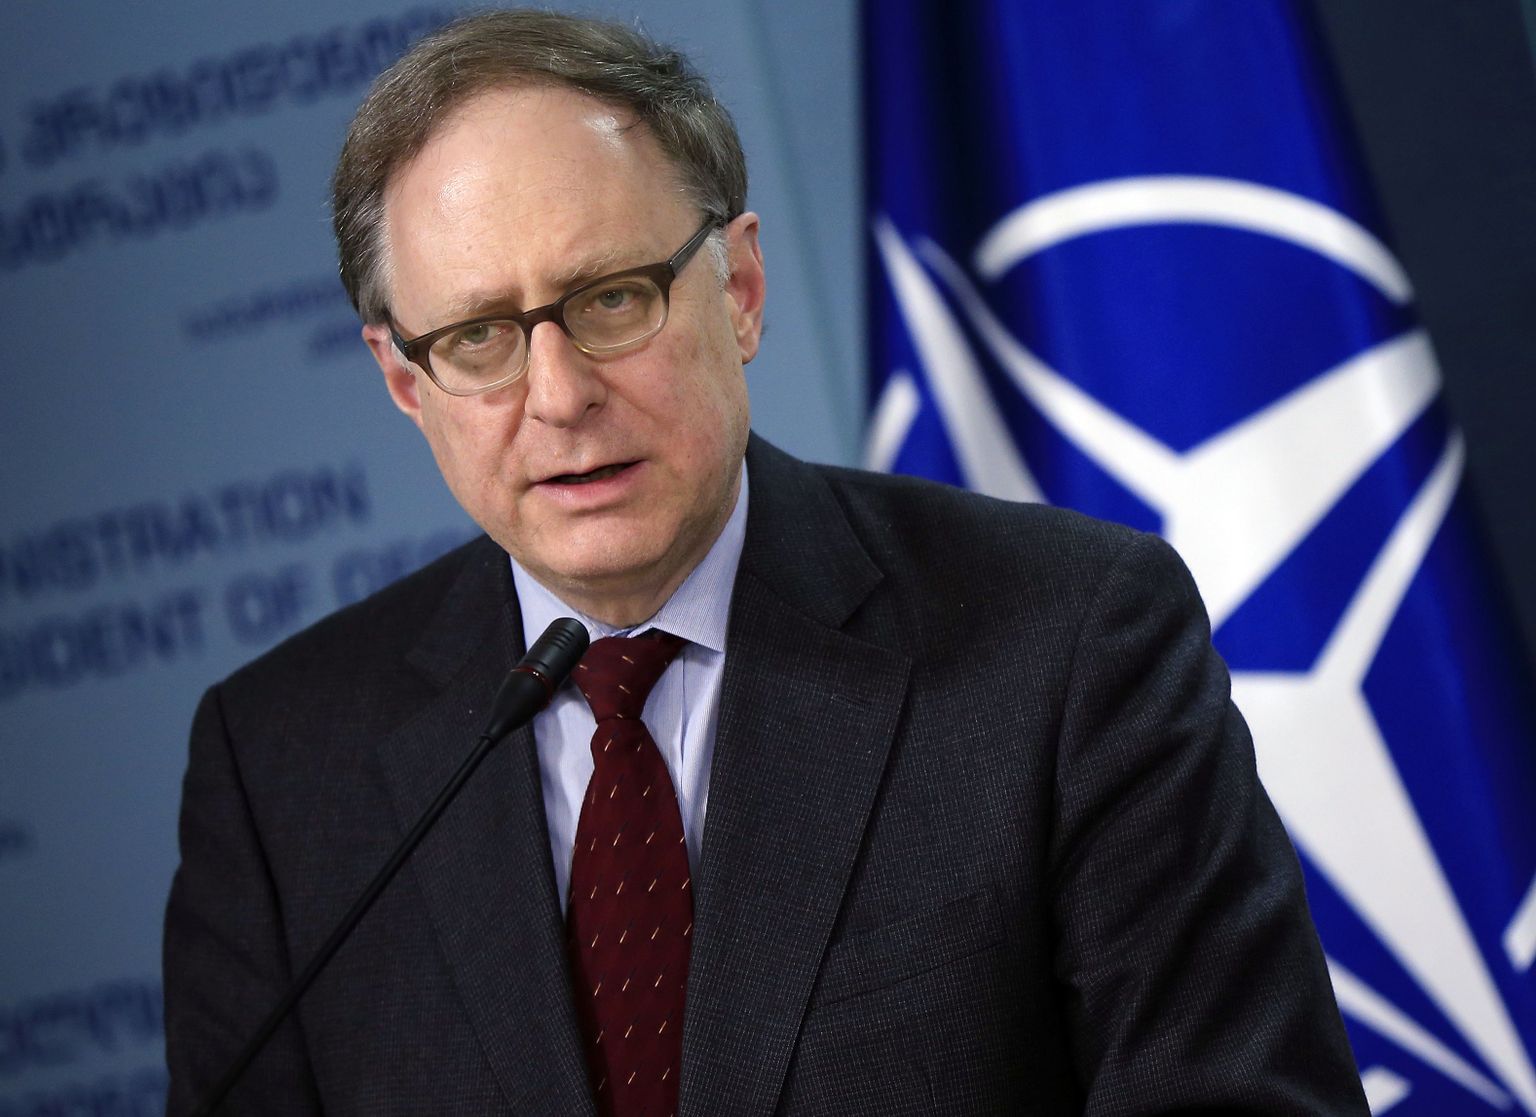 NATO asepeasekretär Alexander Vershbow